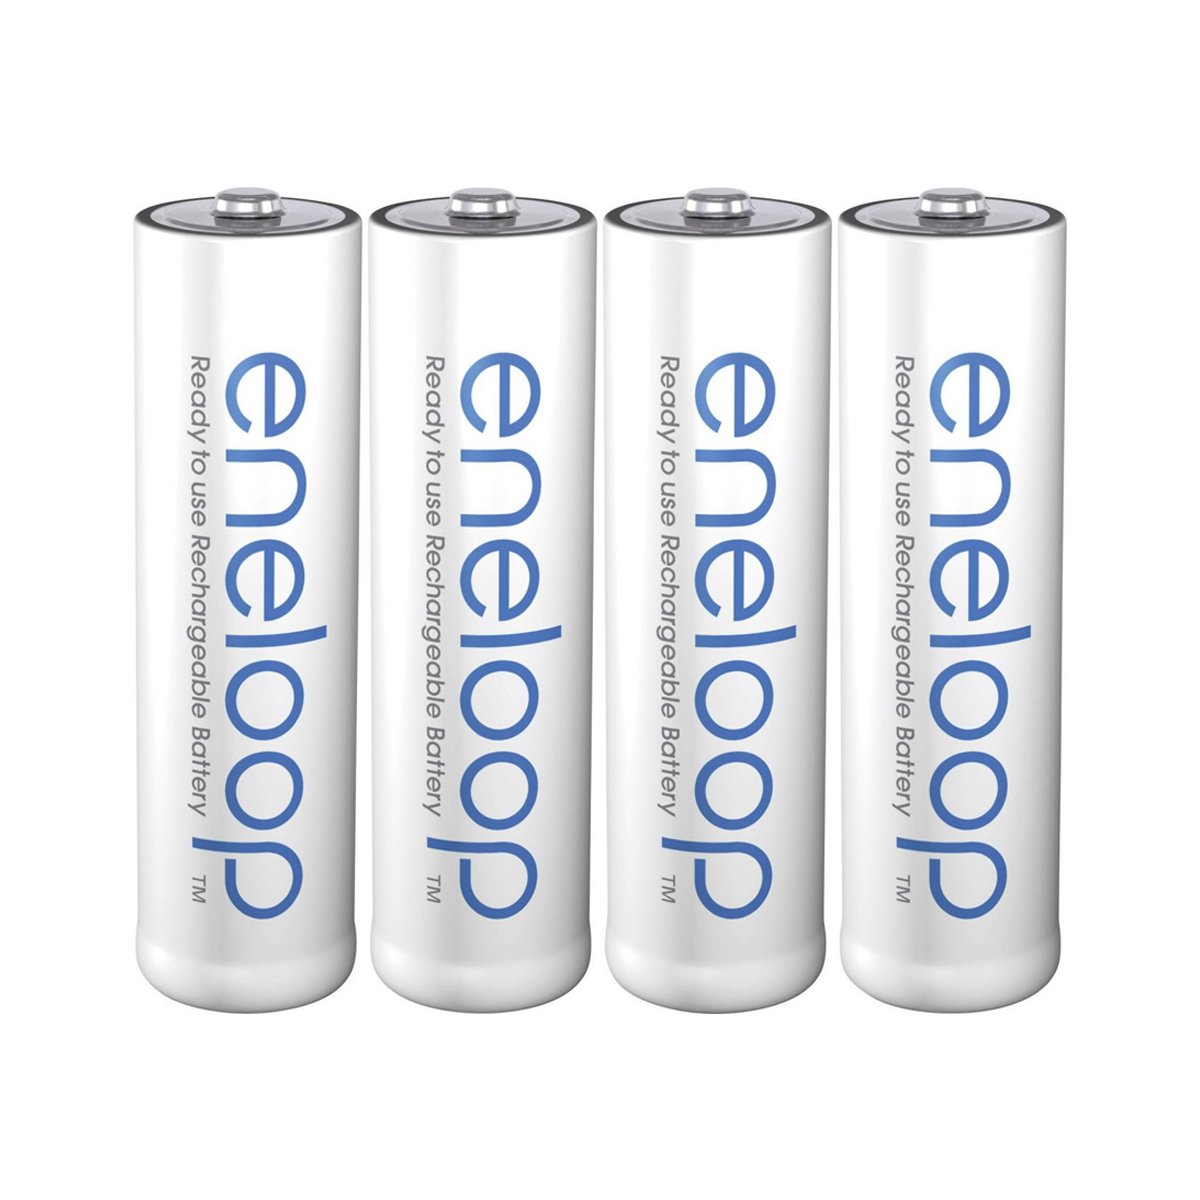 Eneloop AA Rechargeable Batteries x4 (White)